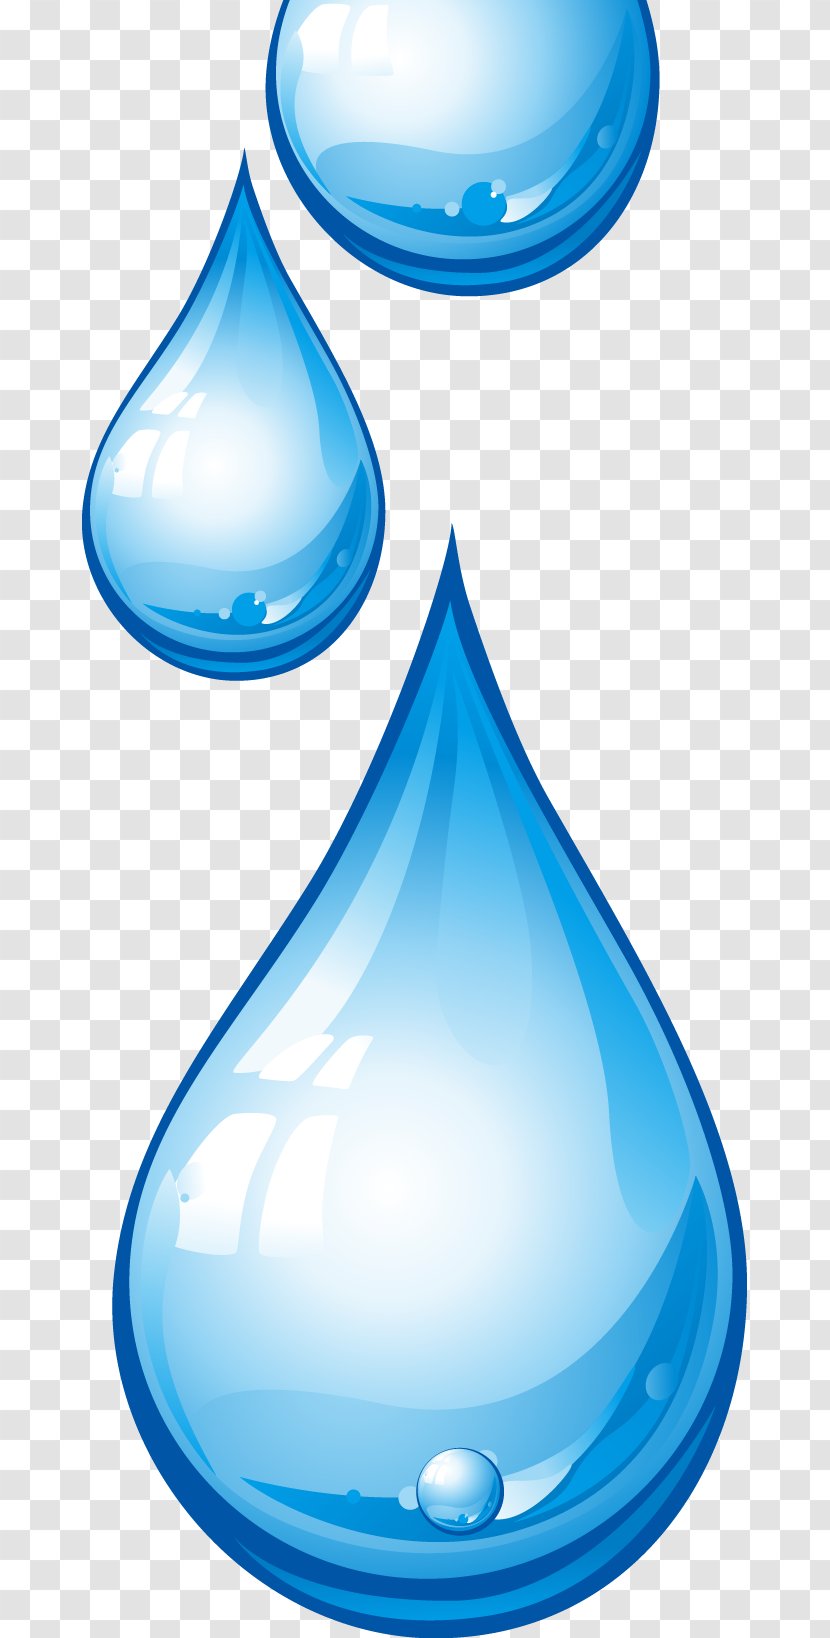 Drop Water Euclidean Vector Resources Fine Drops Of Droplets Transparent Png